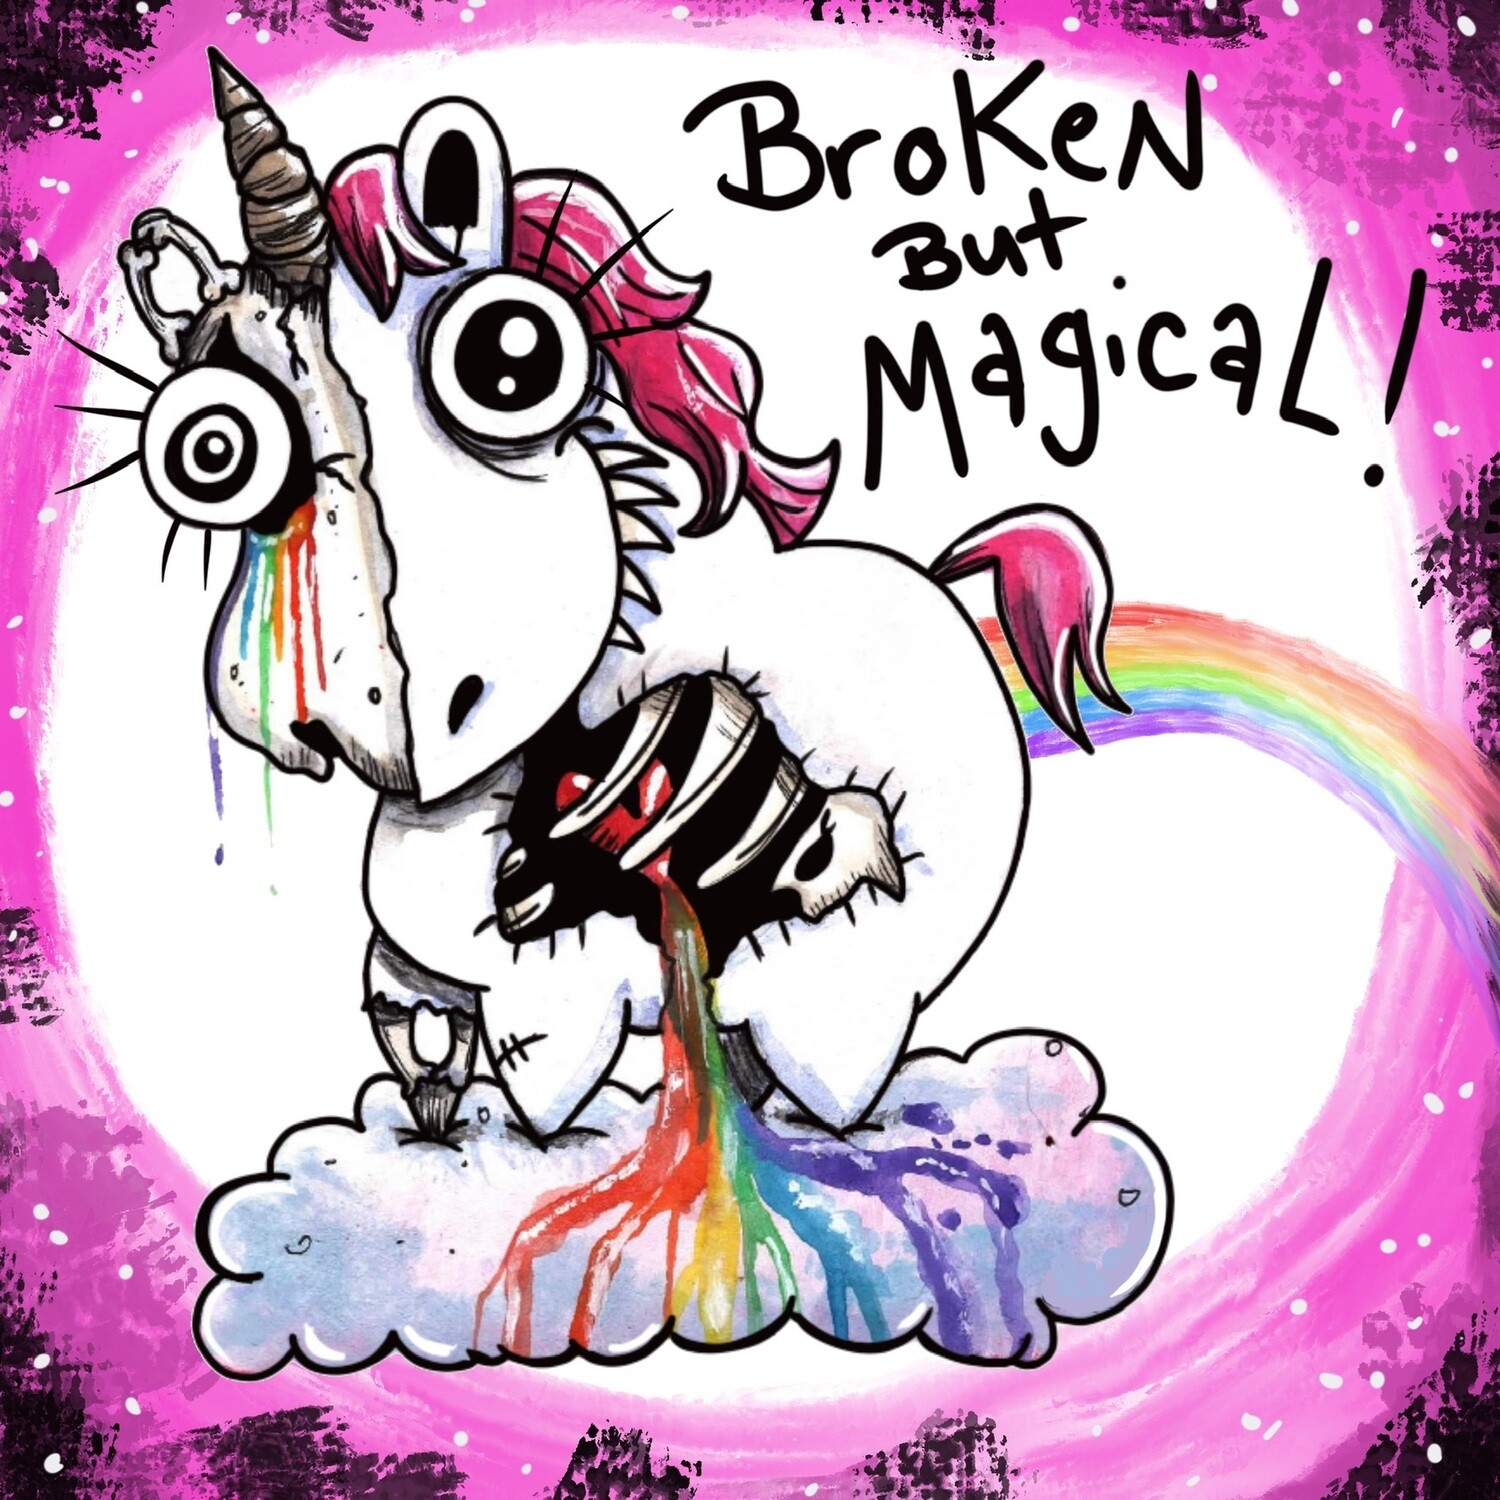 Broken but Magical by Emi Boz